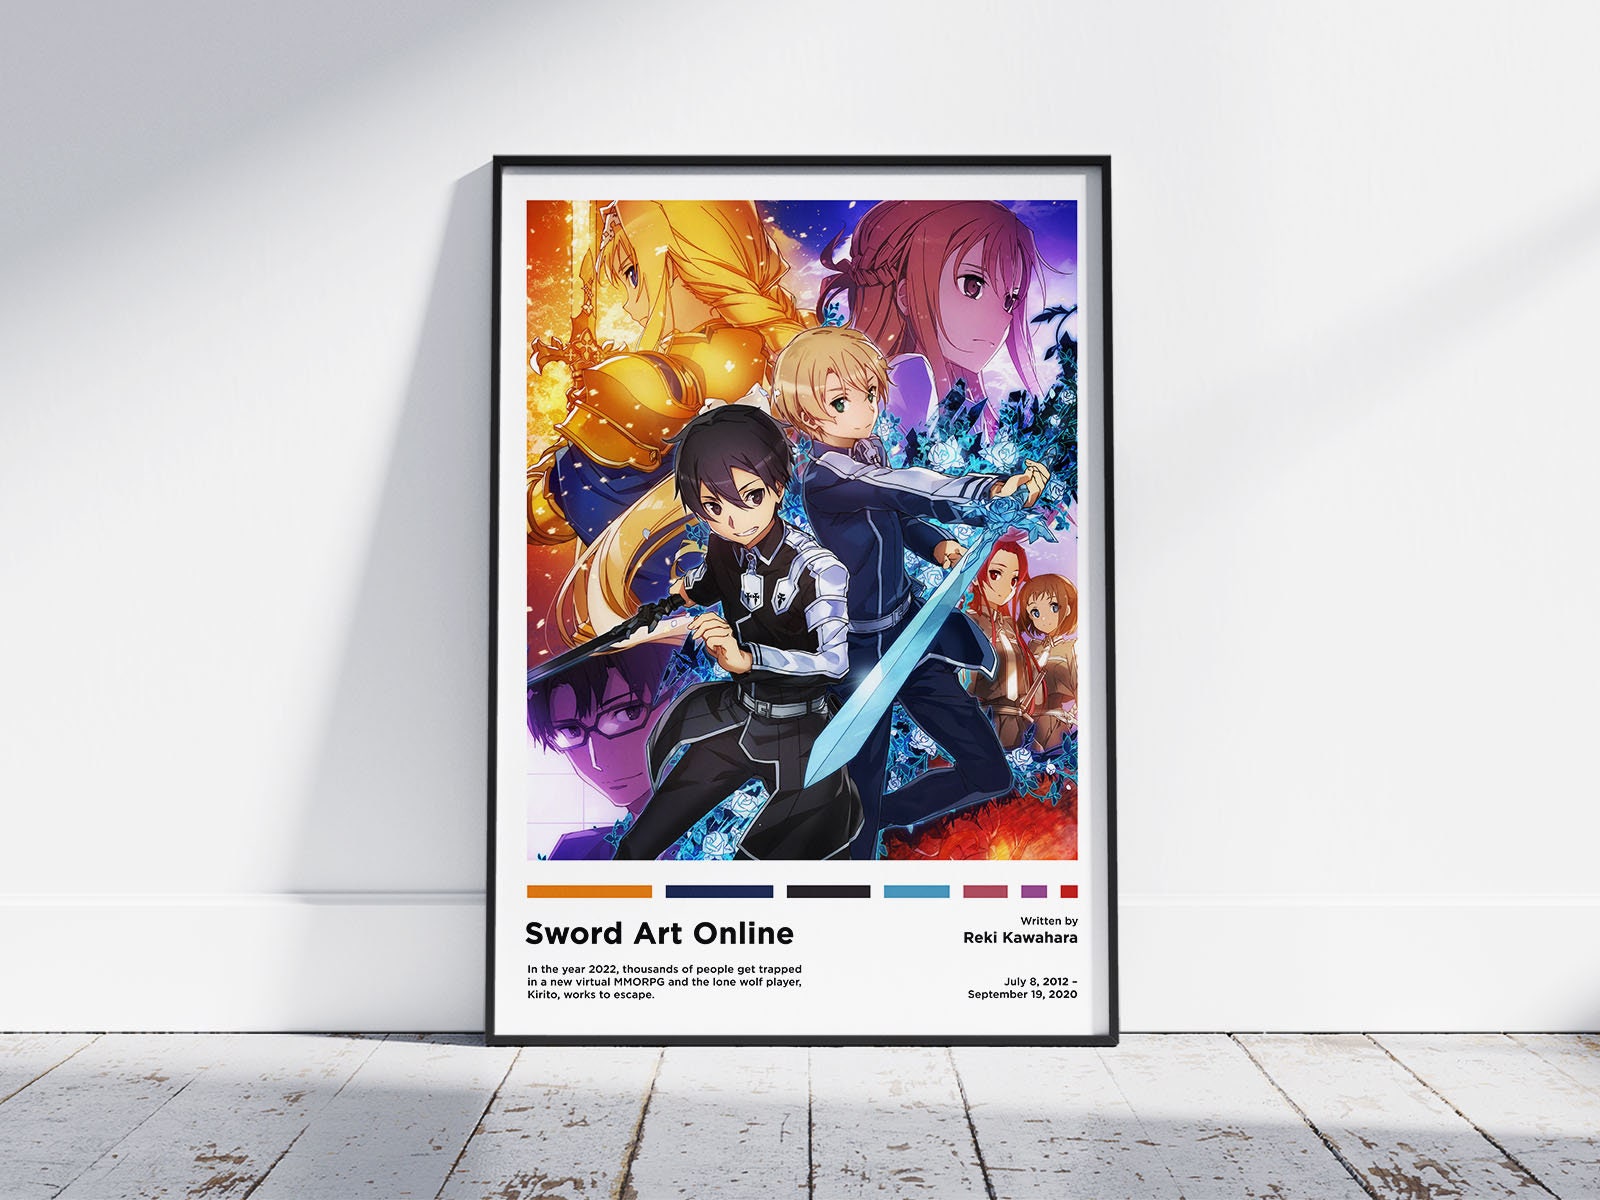 SAO Progressive Poster for Sale by Maryhurs